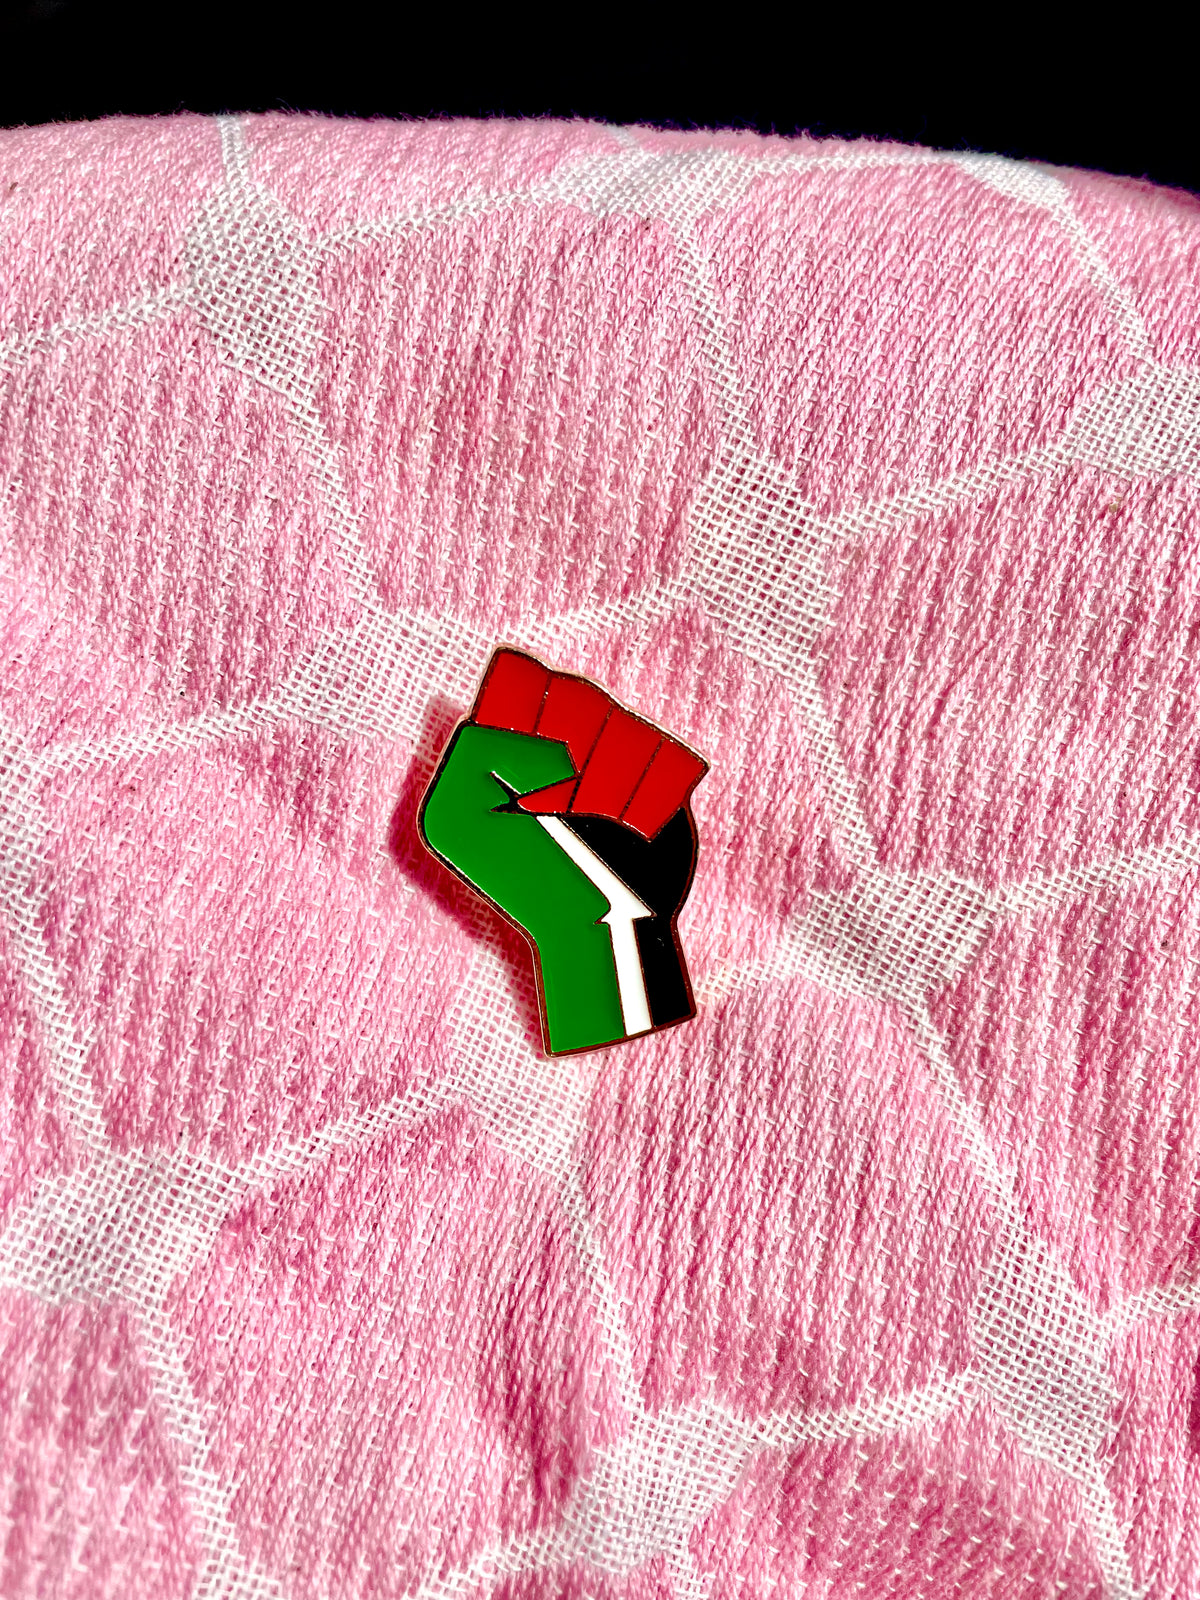 Palestine Solidarity Fist Pin